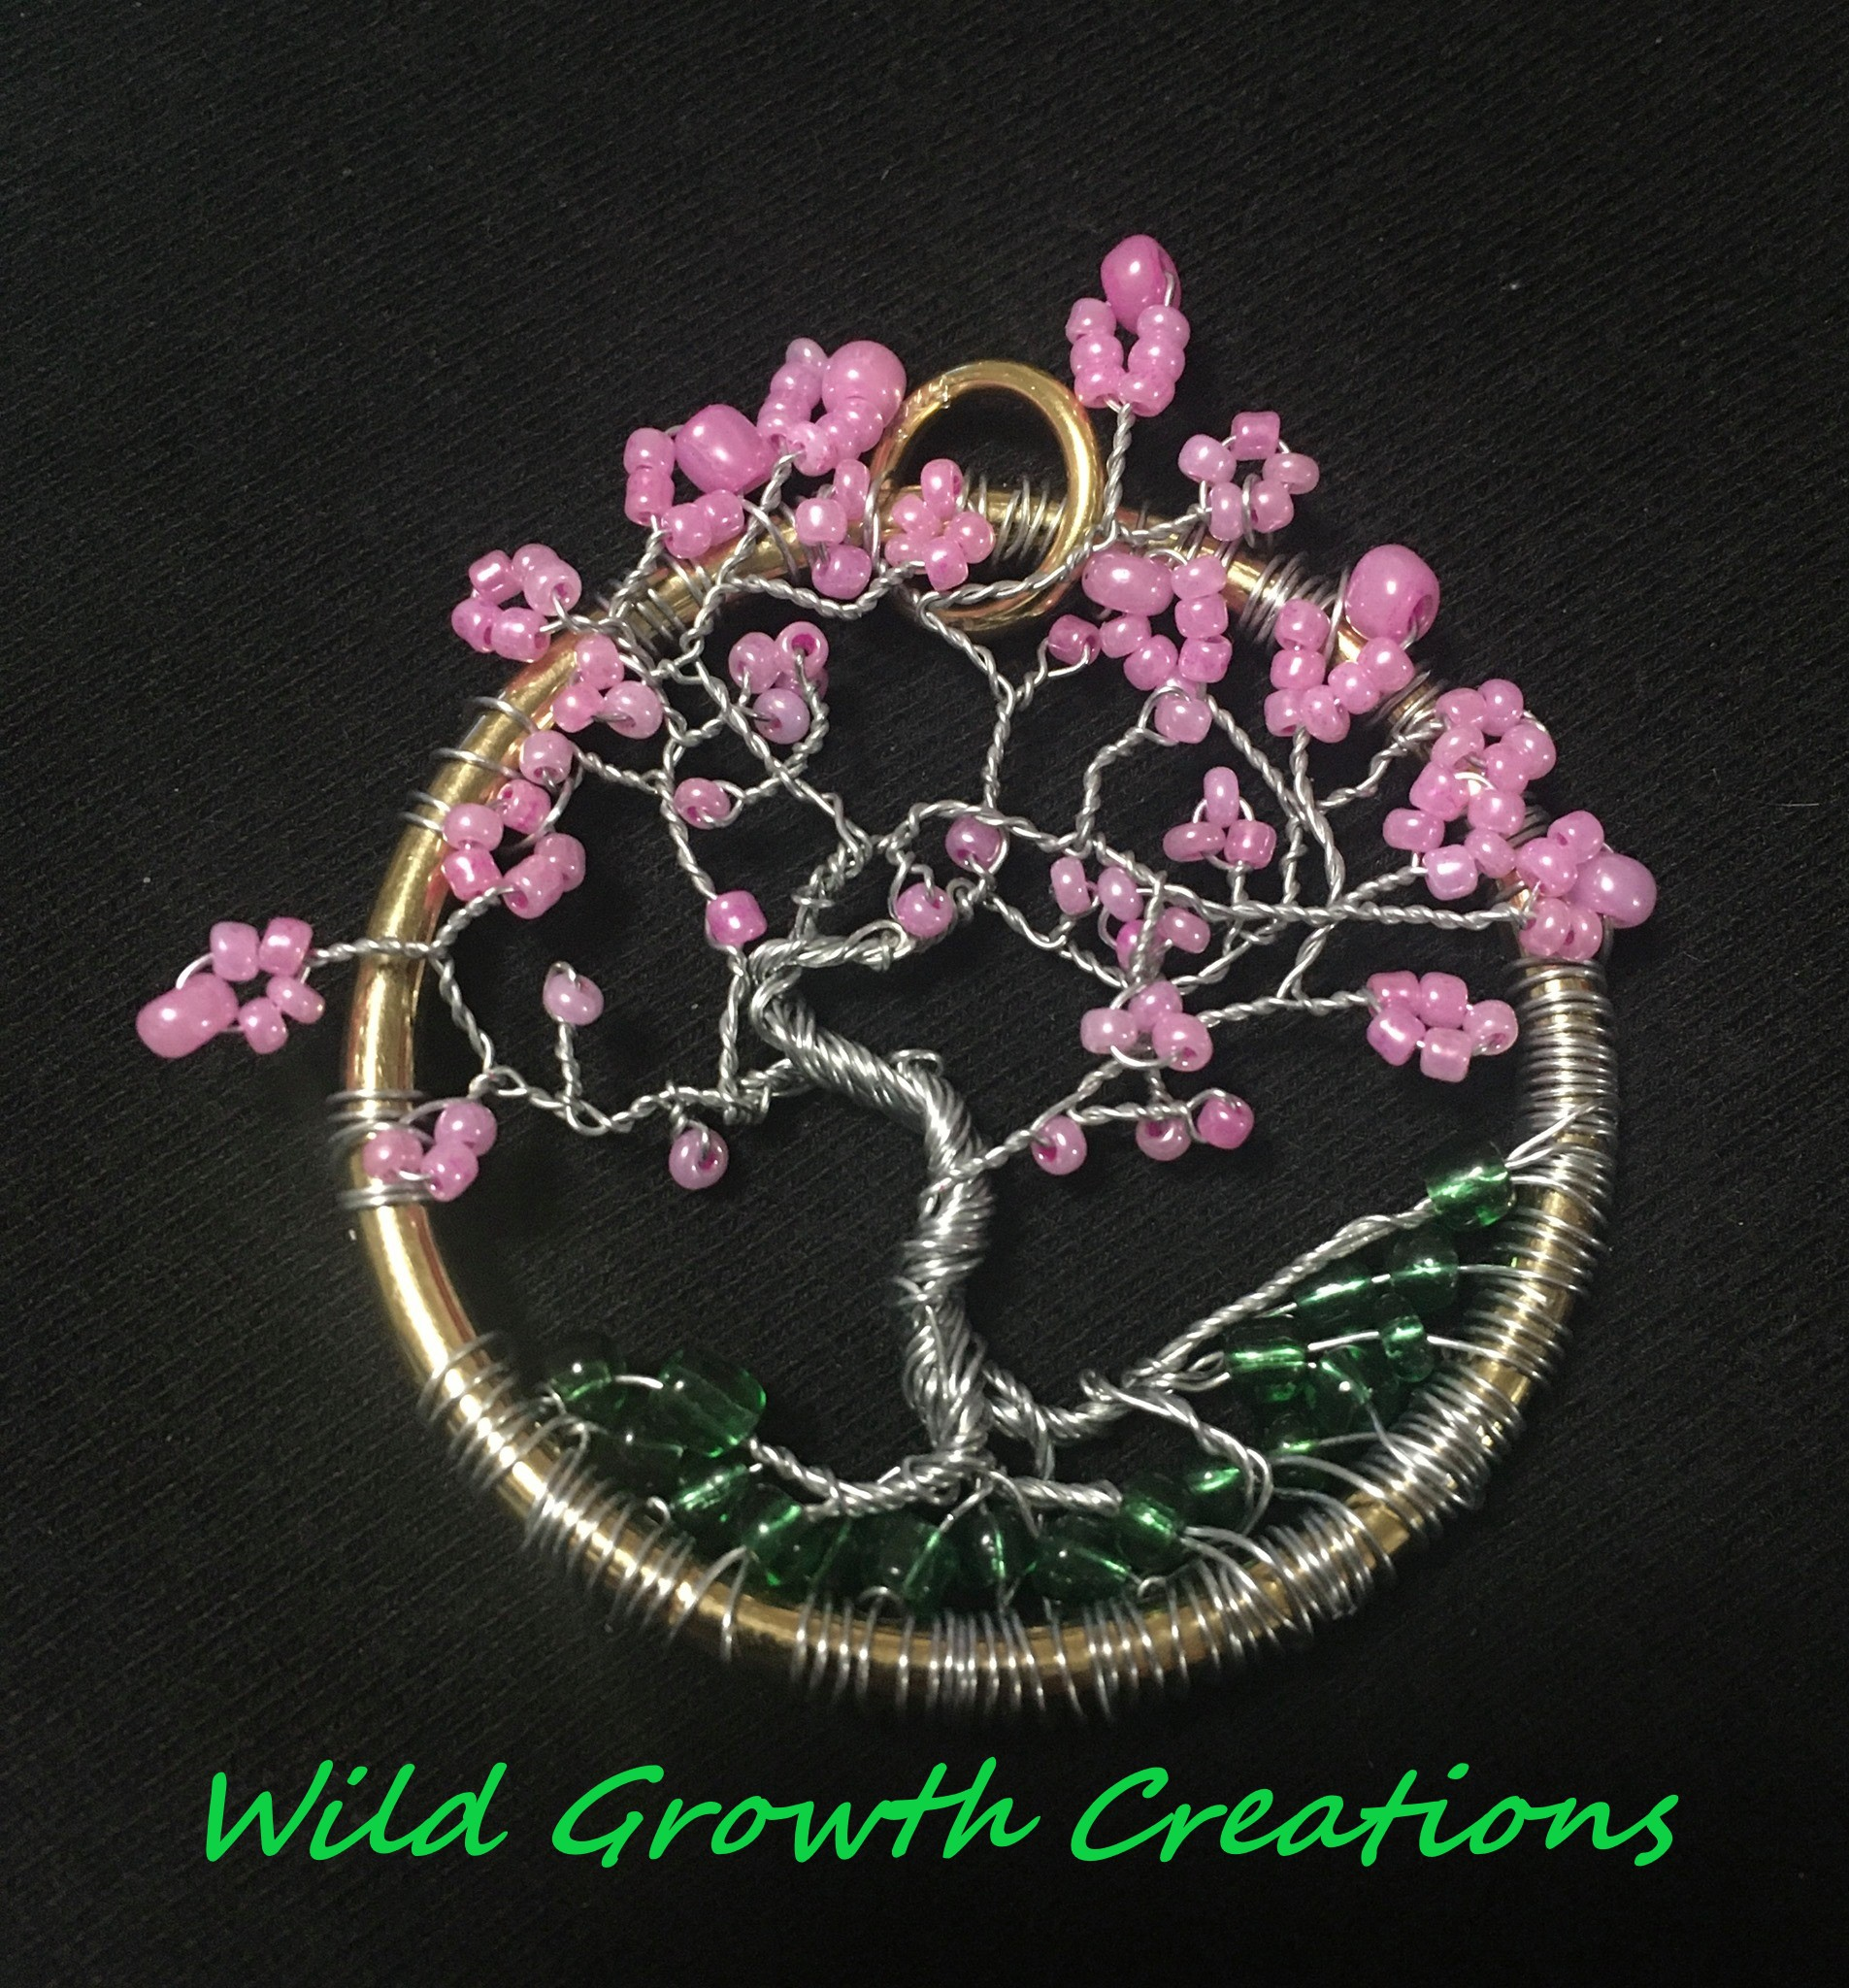 Wild Growth Creations